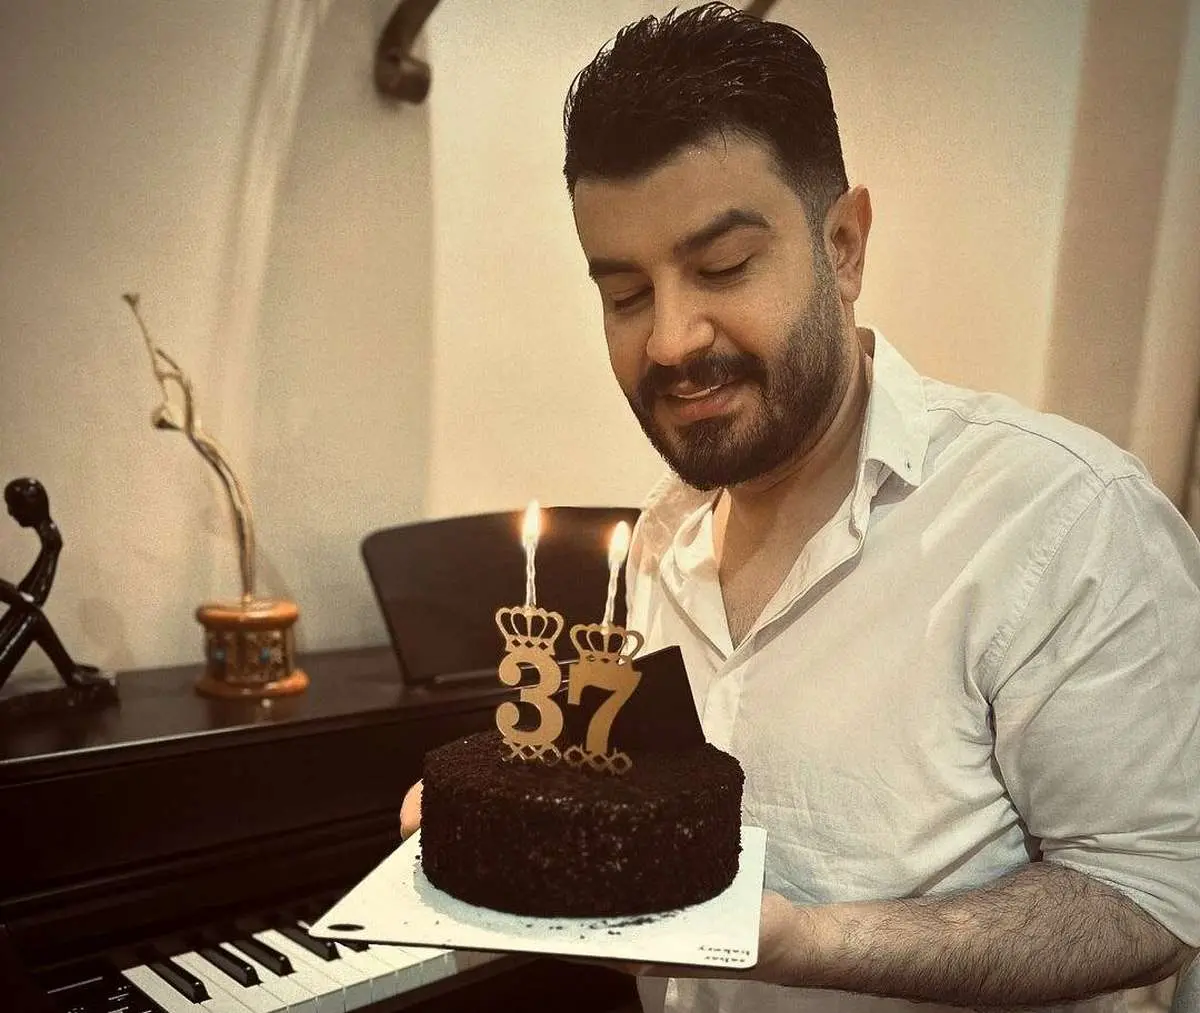 جشن تولد 37 سالگی مجری معروف تلویزیون/عکس